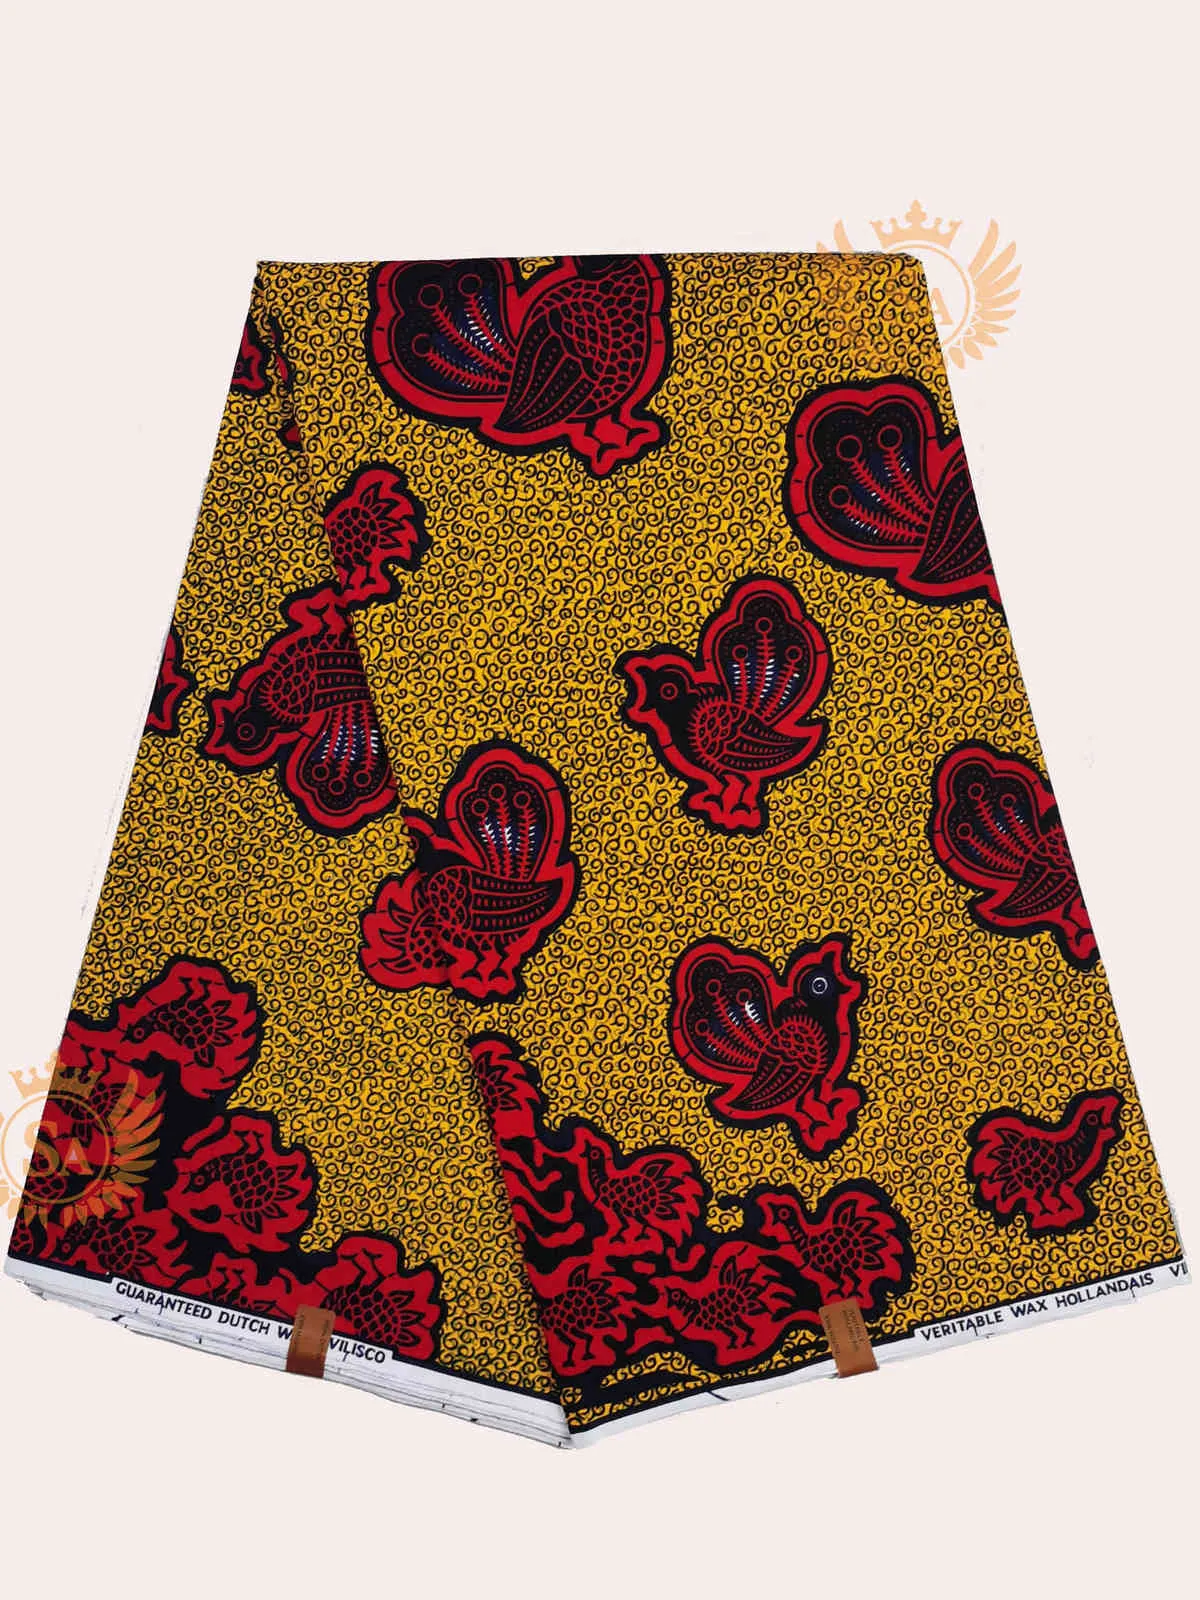 Veritable Wax D Real Wax Print Fabric Dutch Hollandais Pagne Africa Dress Cotton 02 2107022970